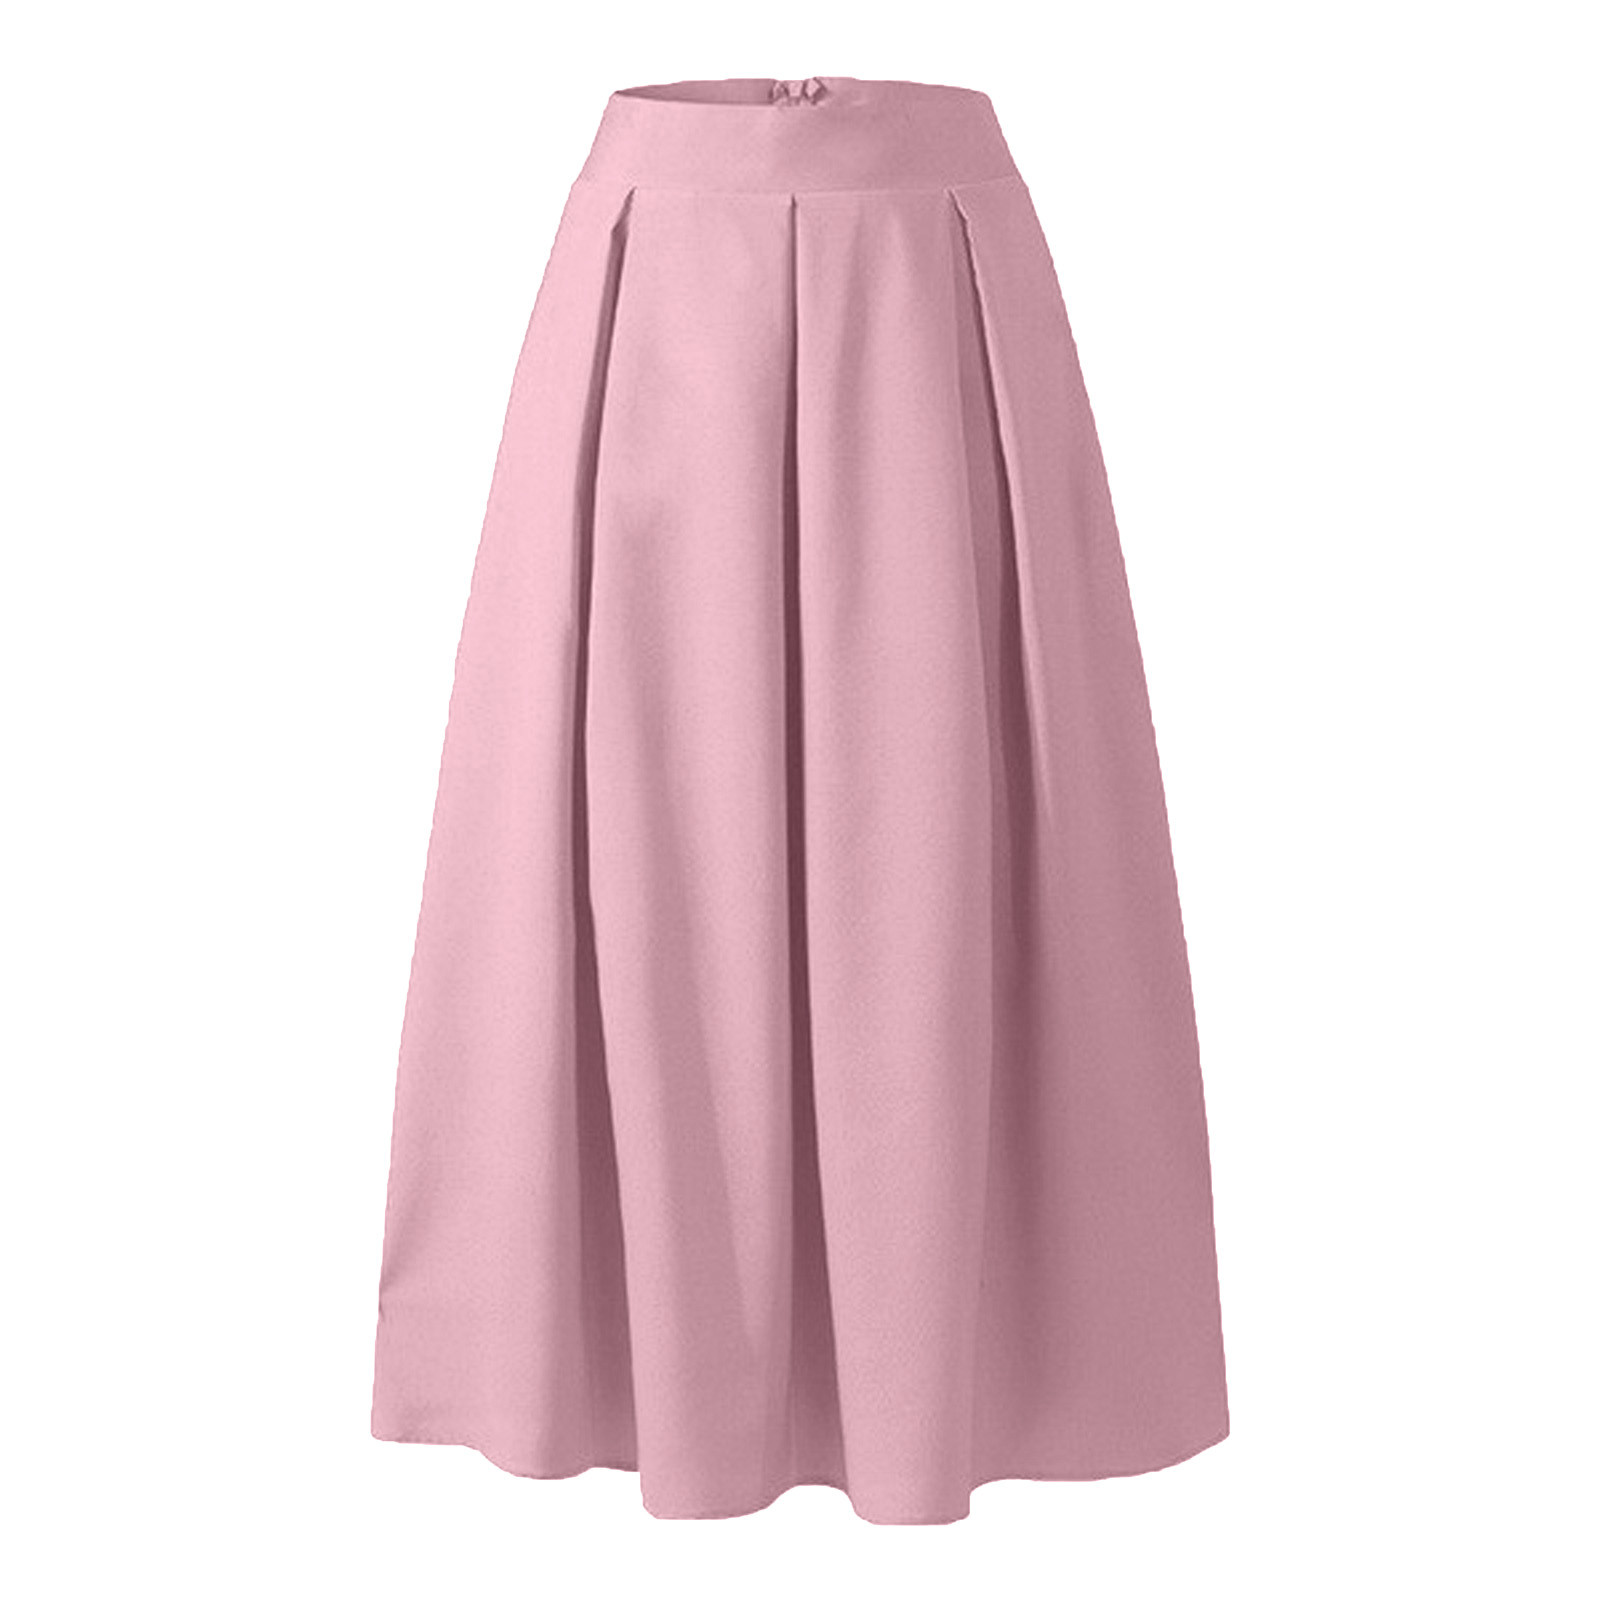 JWZUY Women's High Waist Flared Skirt Pleated Maxi Skirt with Pocket ...